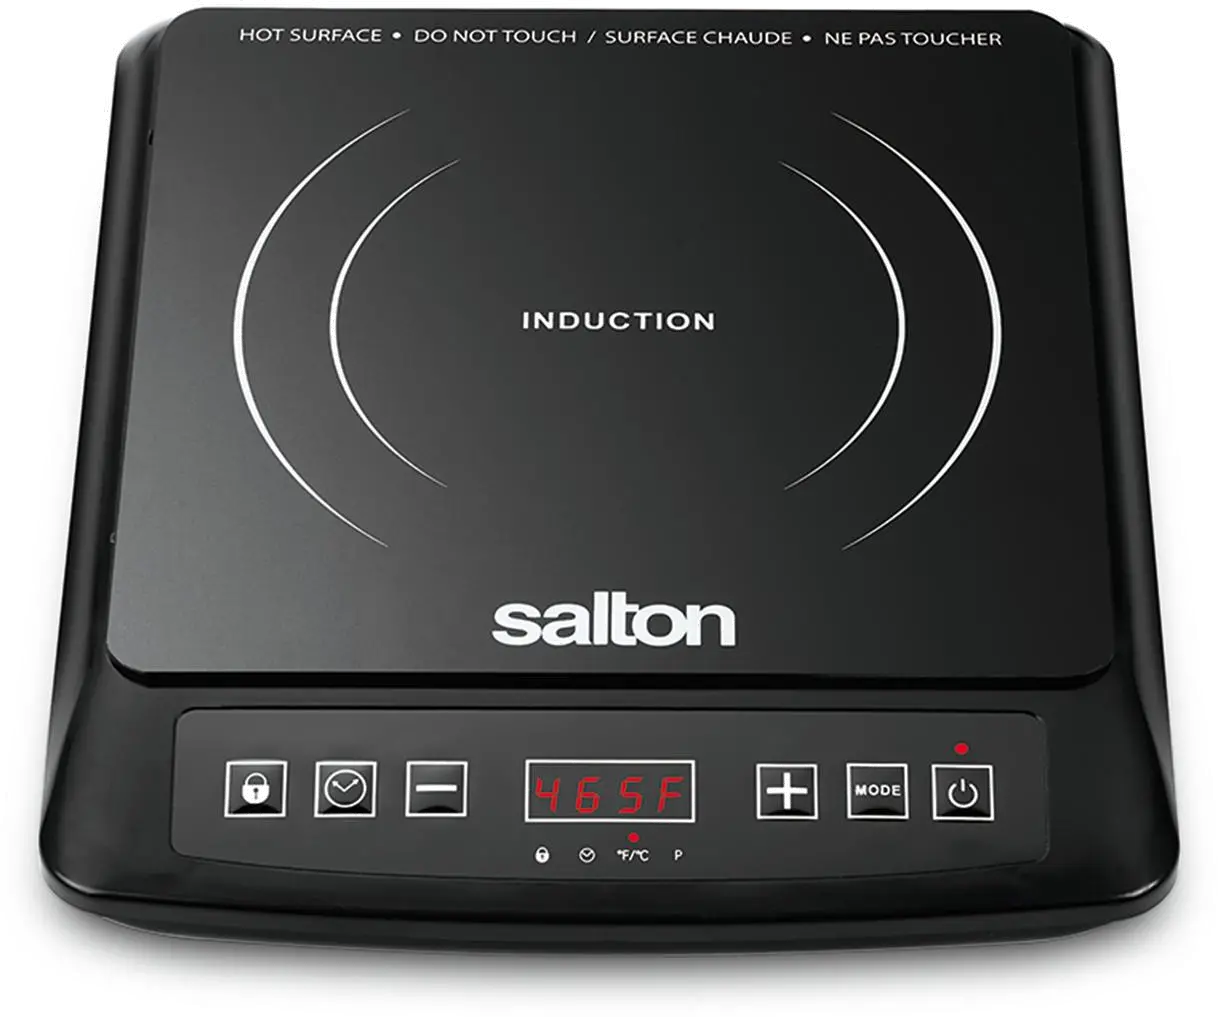 Salton 1500W Portable Induction Cooktop